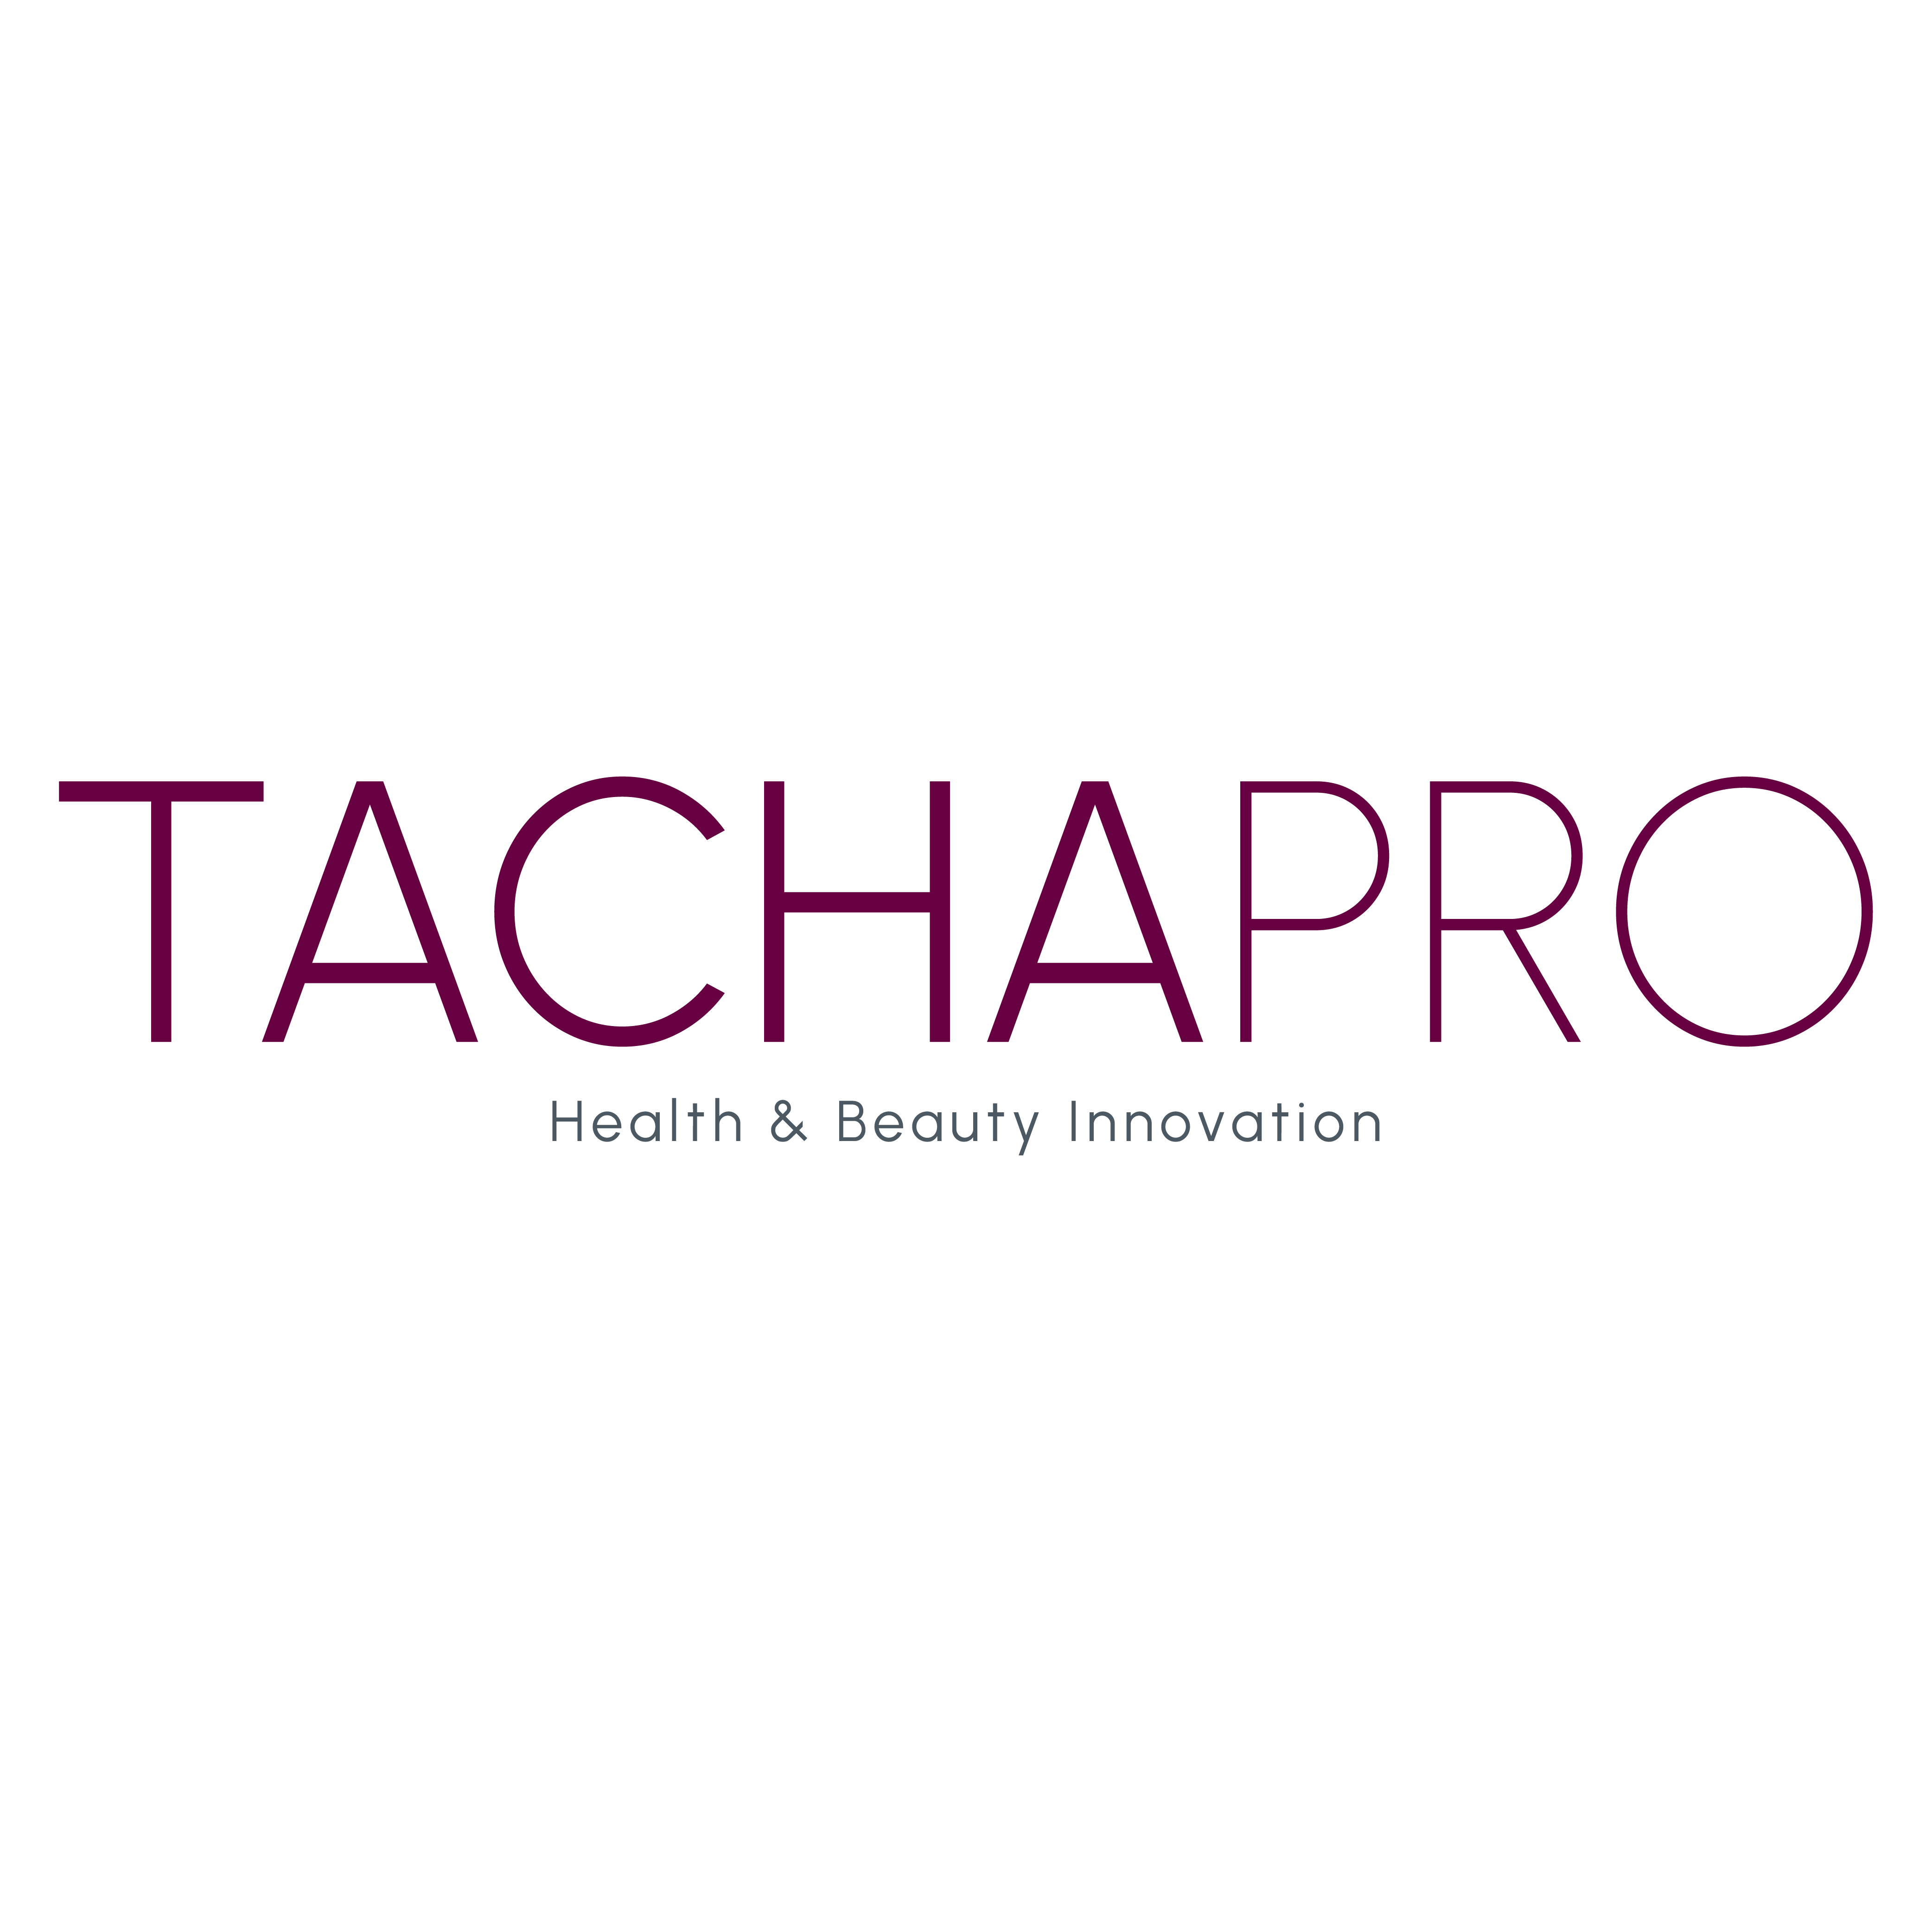 TachaPro